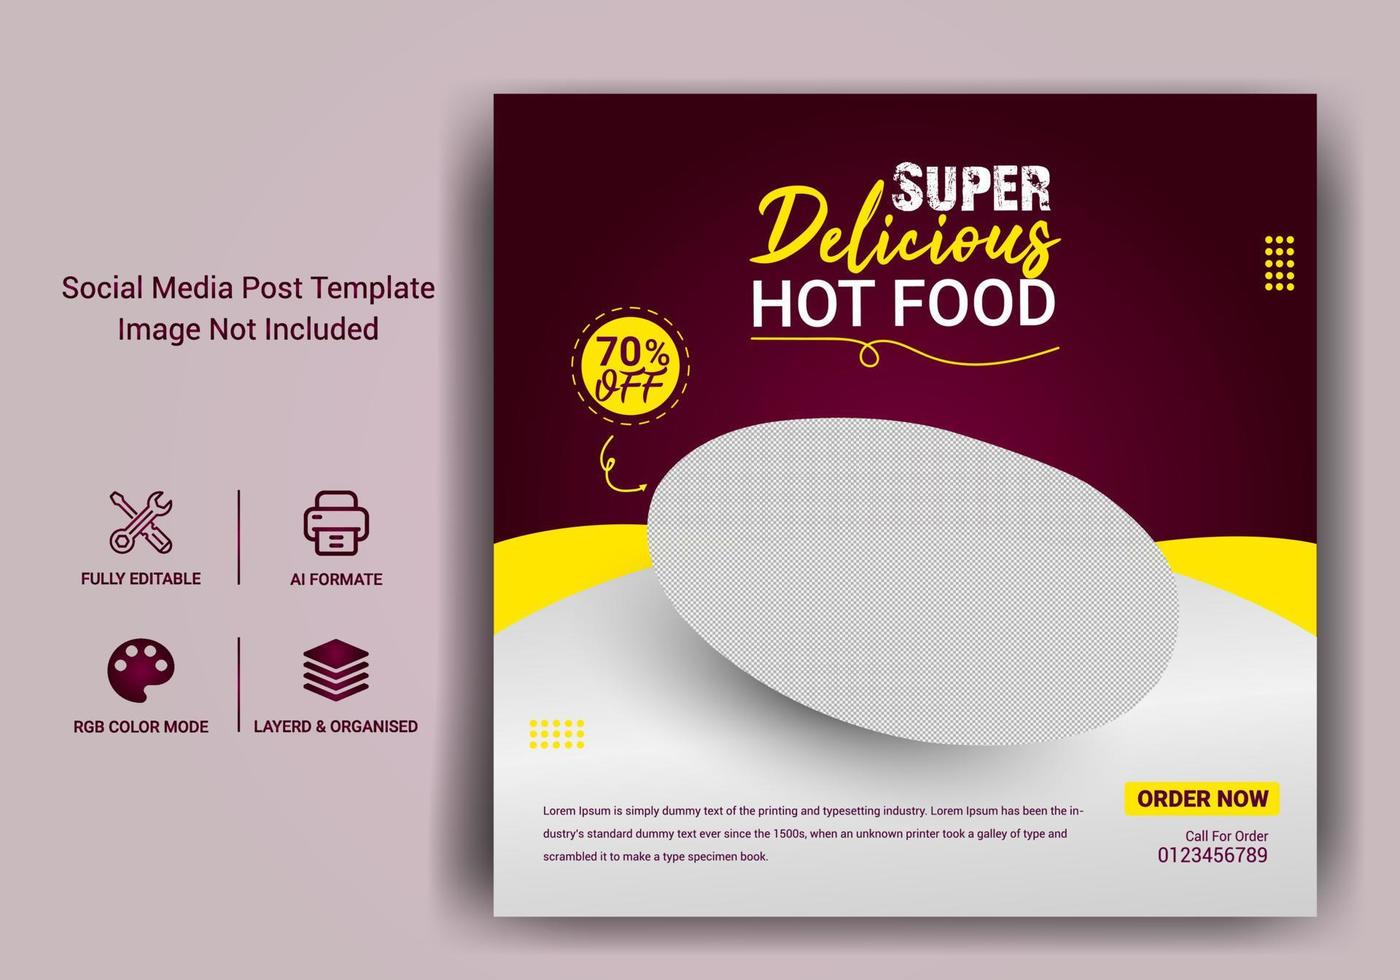 Delicious food or Restaurant Food Editable Social Media Post Template Design vector